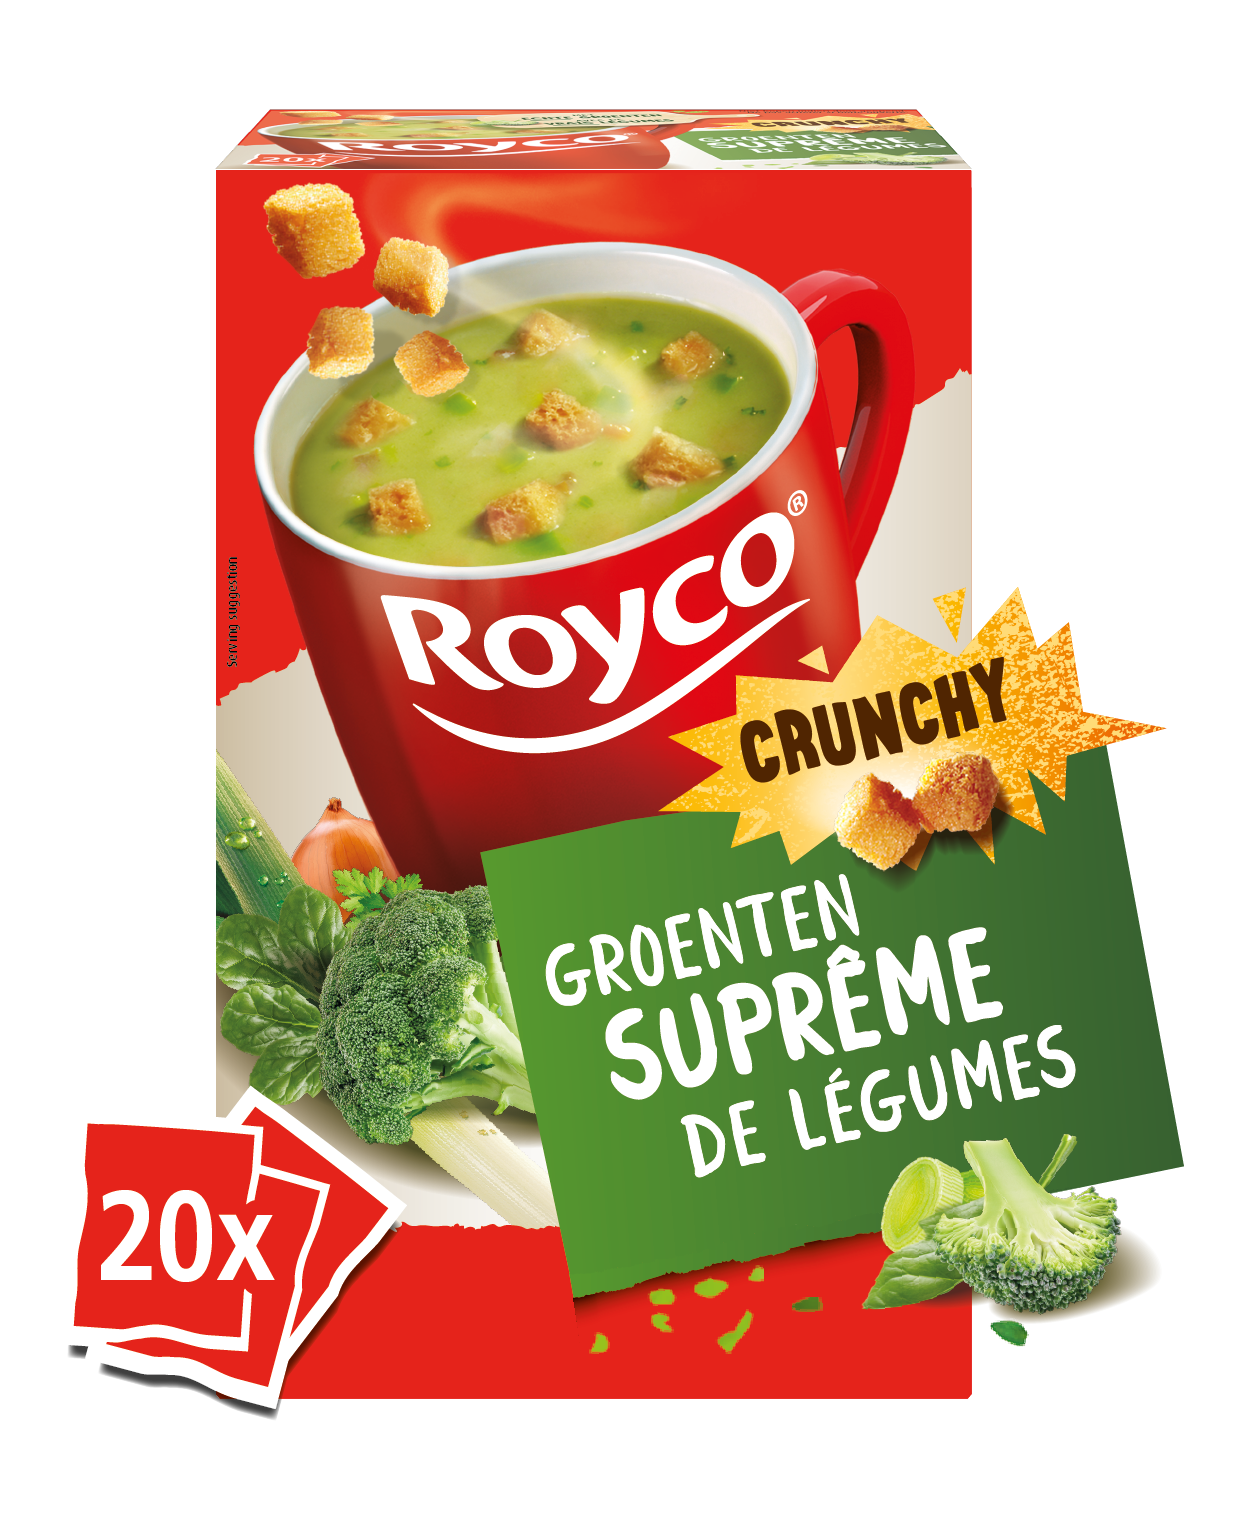 Royco Crunchy Groentensuprême